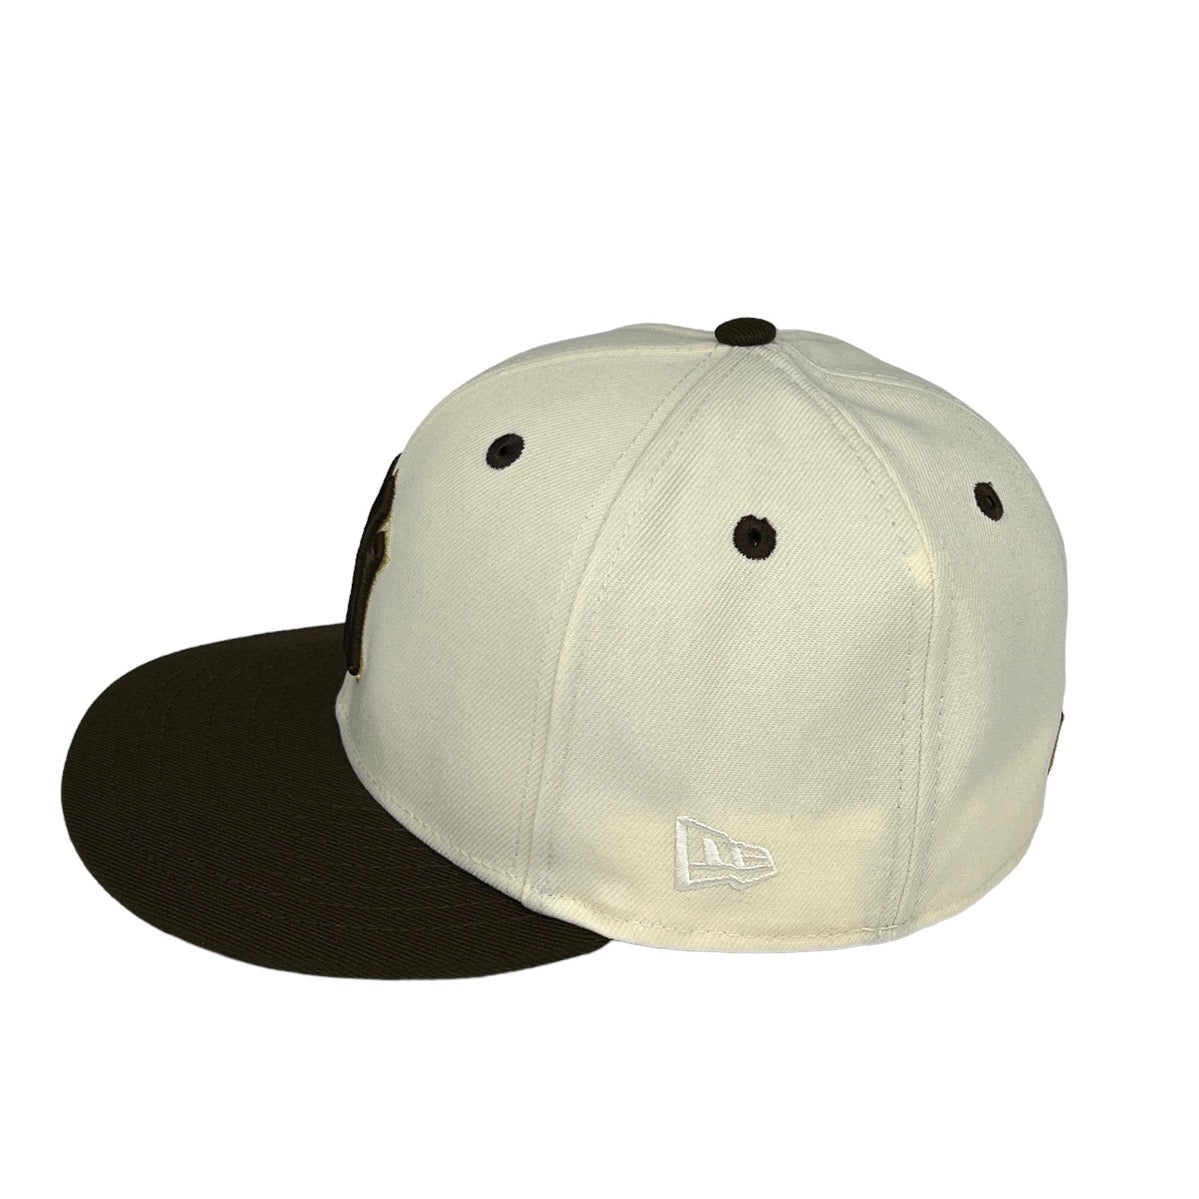 Raiders New Era Fitted 59fifty Black Corduroy Cap Hat Grey UV